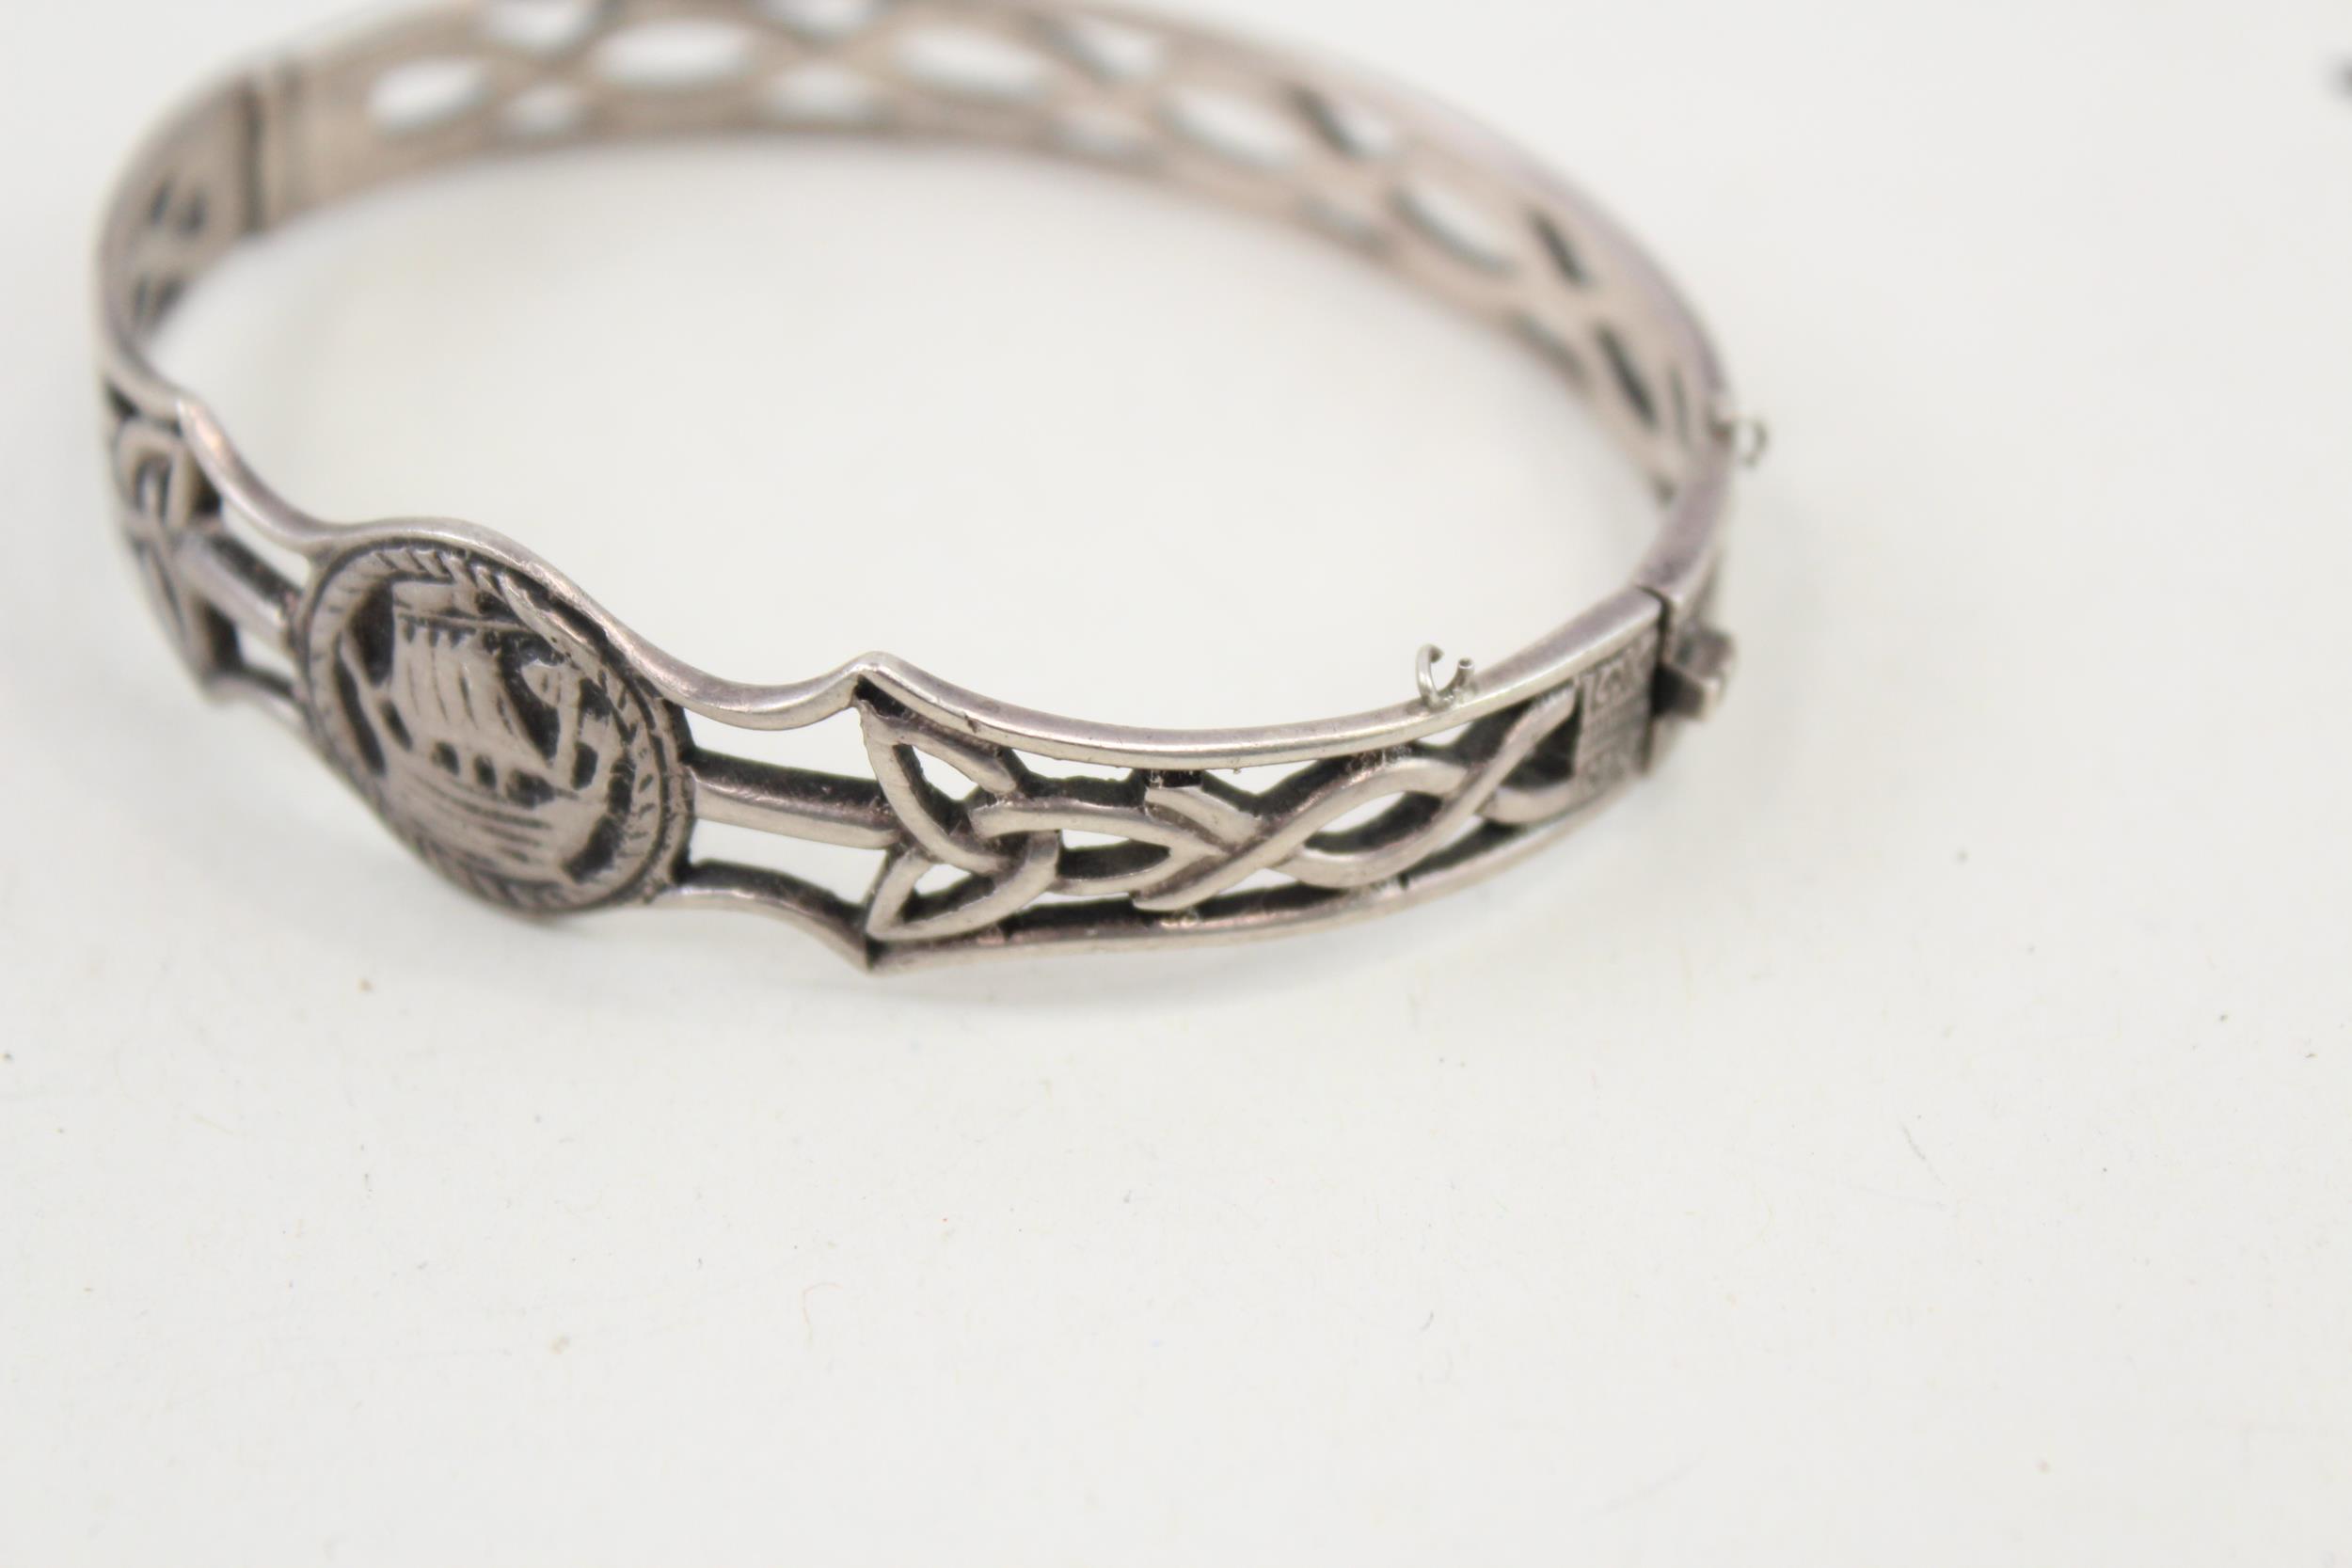 Silver Celtic bangle with ship emblem (21g) - Image 3 of 6